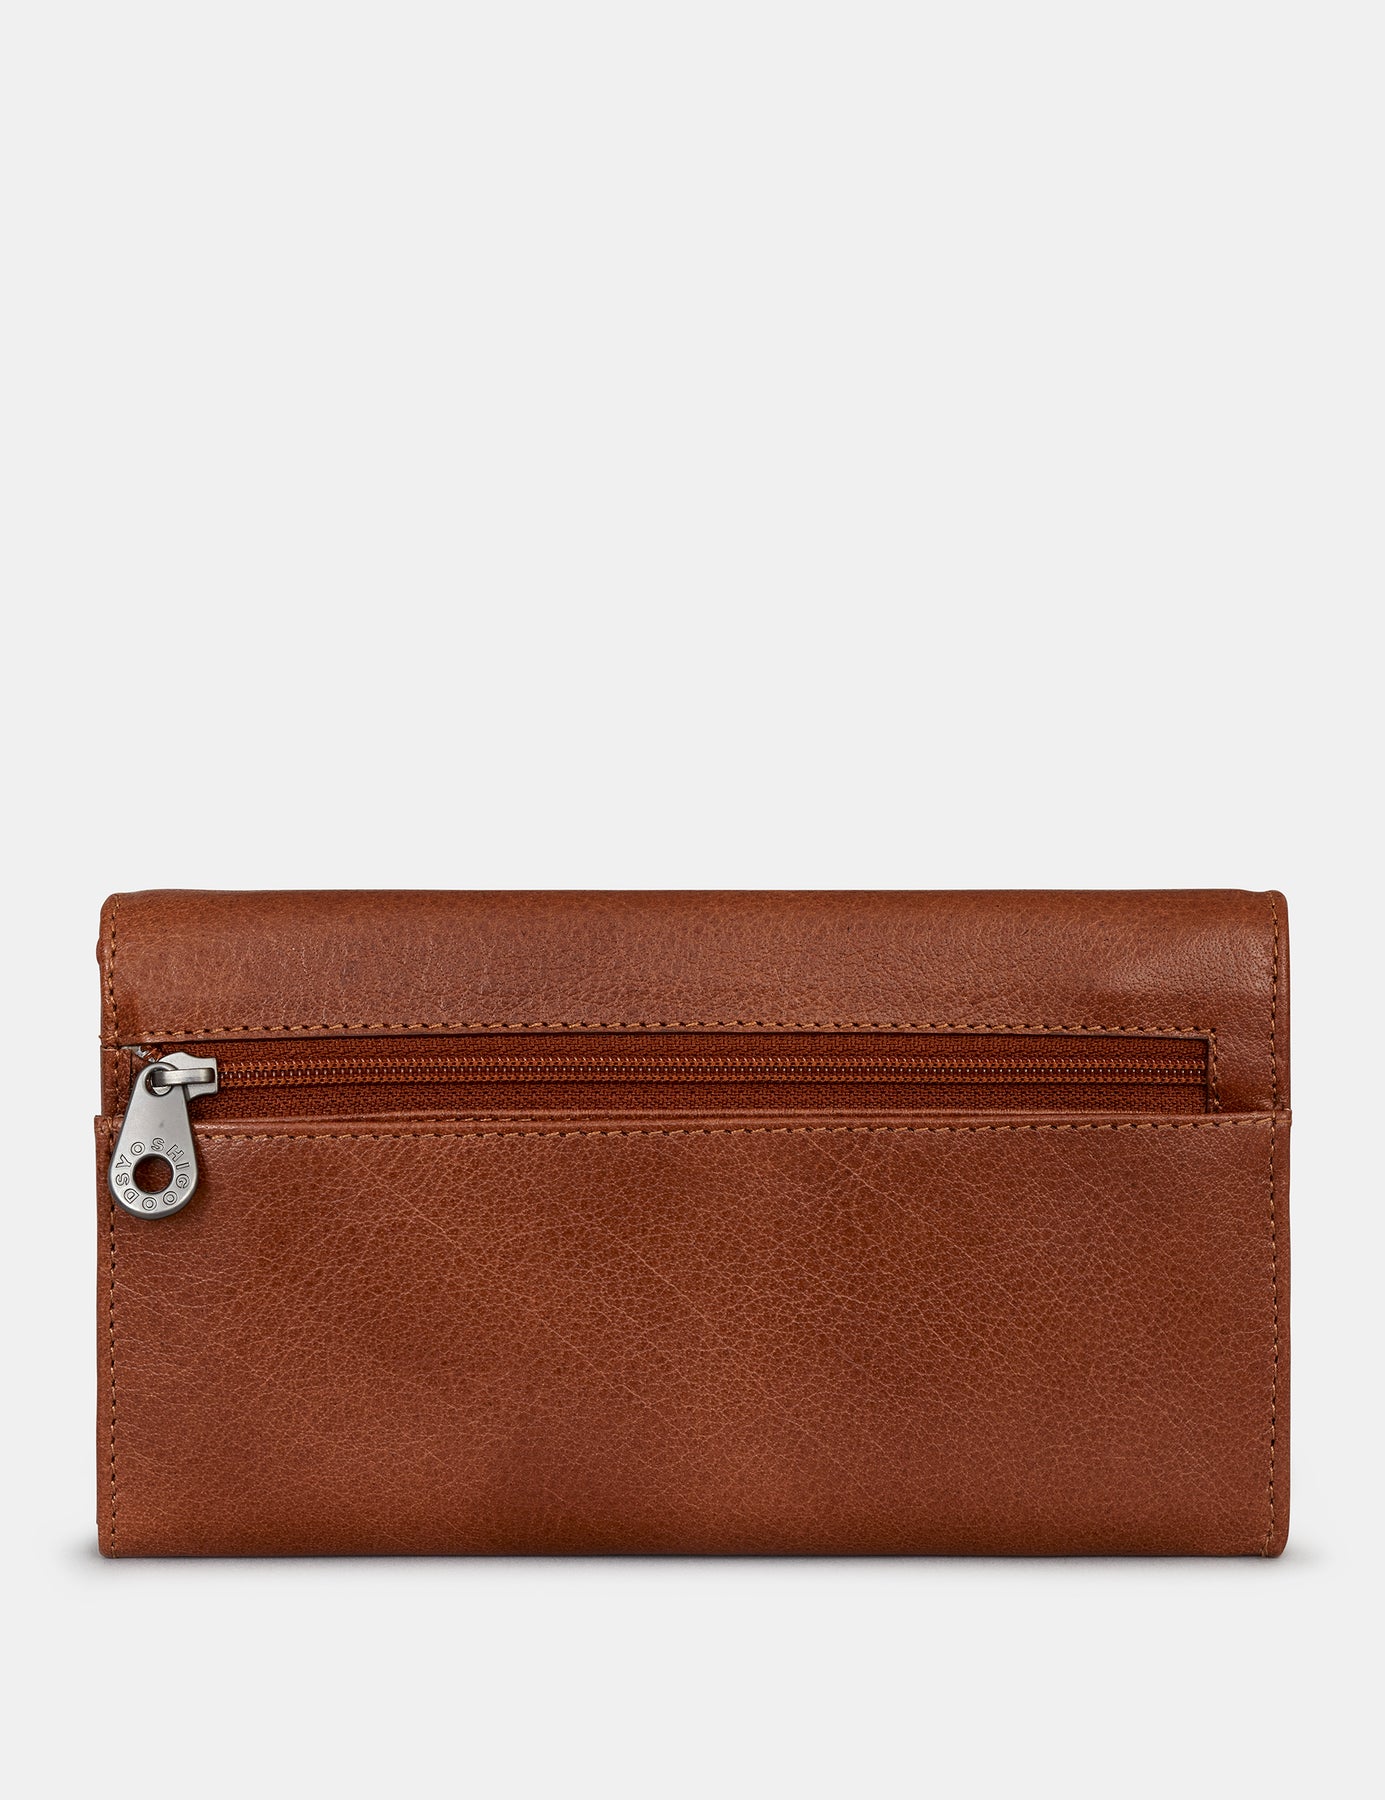 Buy LaFille Women's Handbag | Ladies Purse online